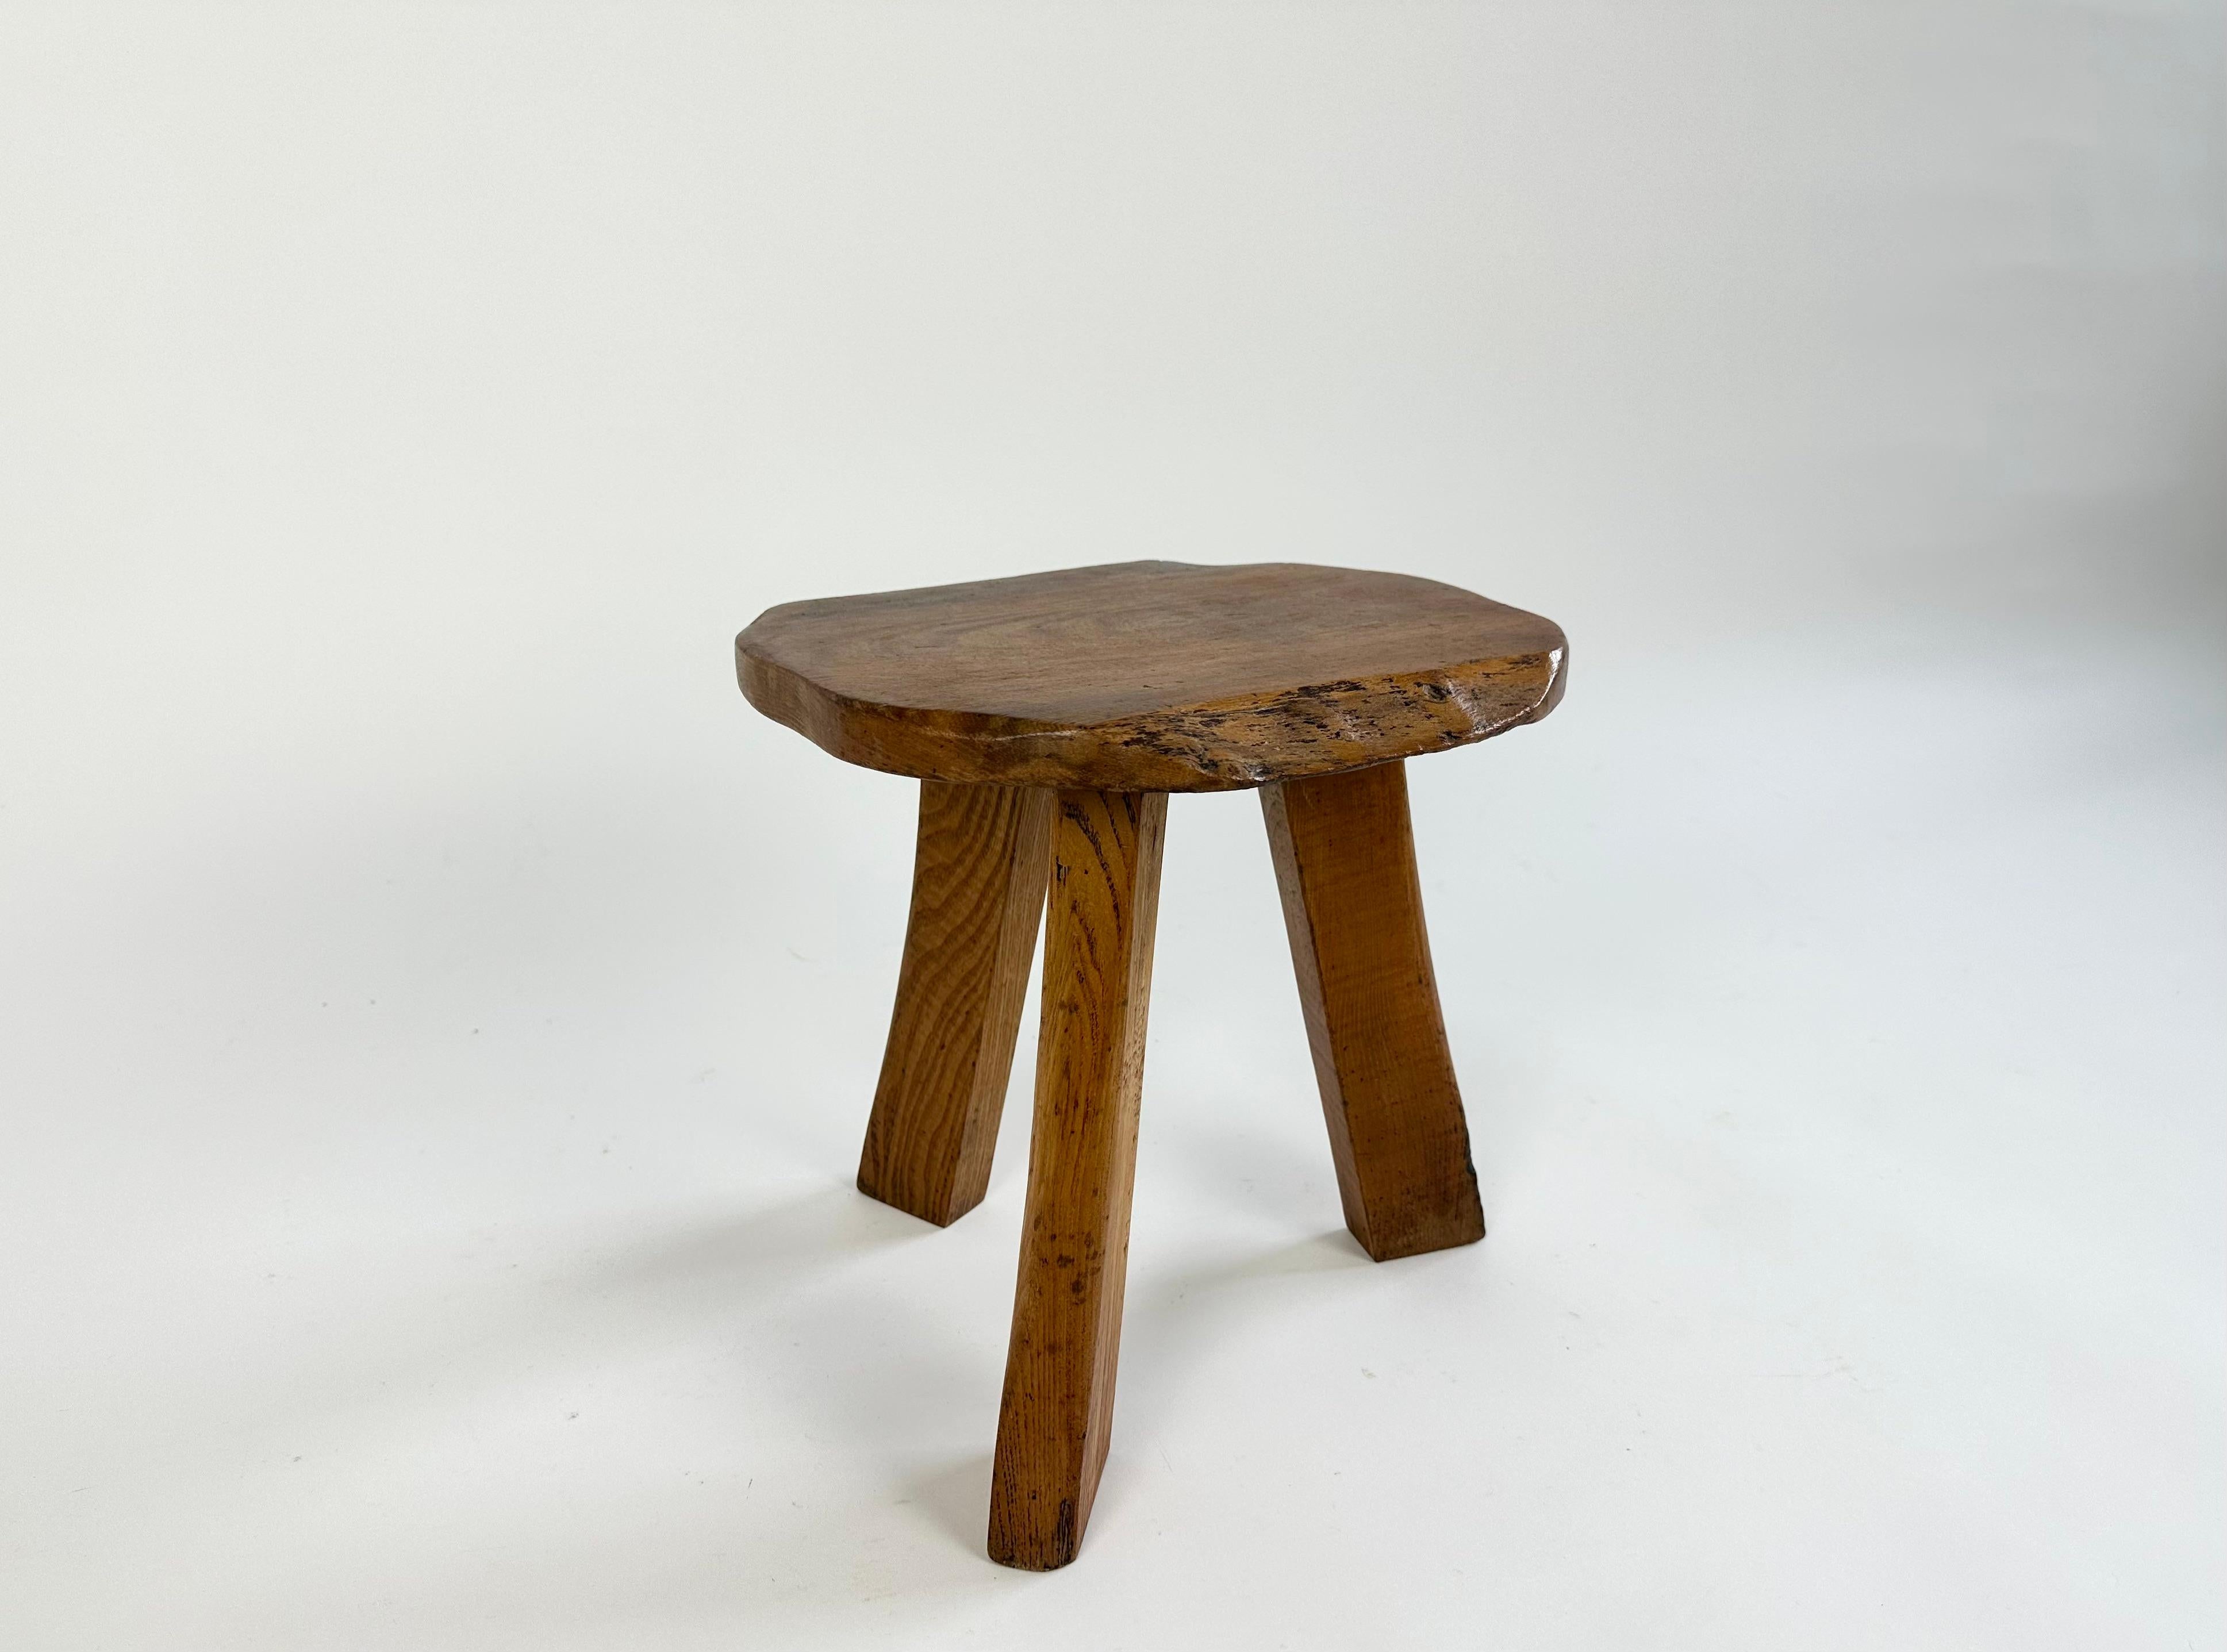 Vintage rustic stool by Wanderwood, England c.1950-60 For Sale 3